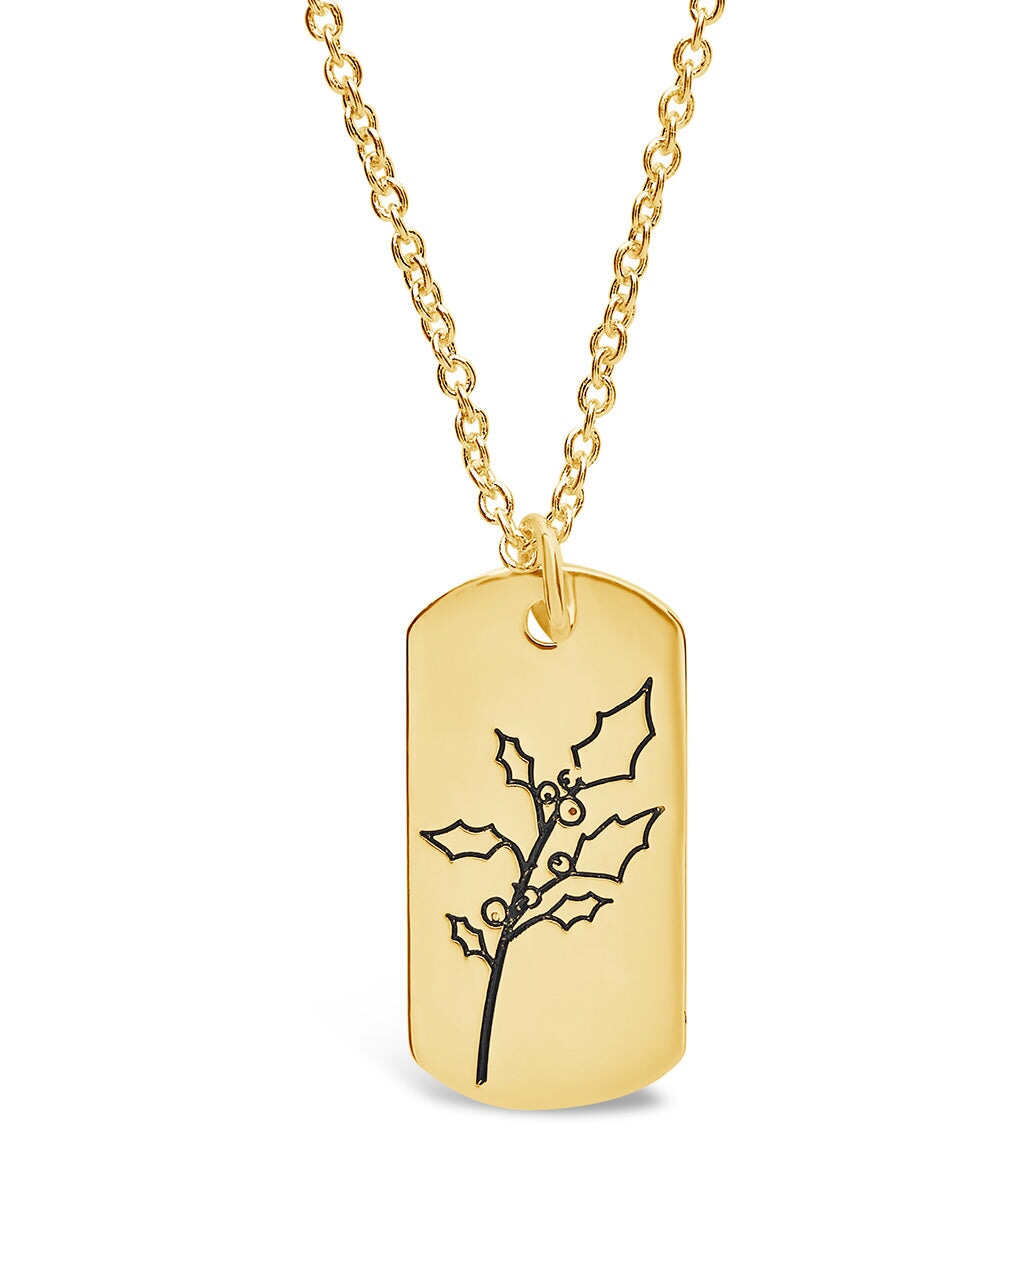 Birth Flower Pendant Necklace Sterling Forever Gold December / Holly 